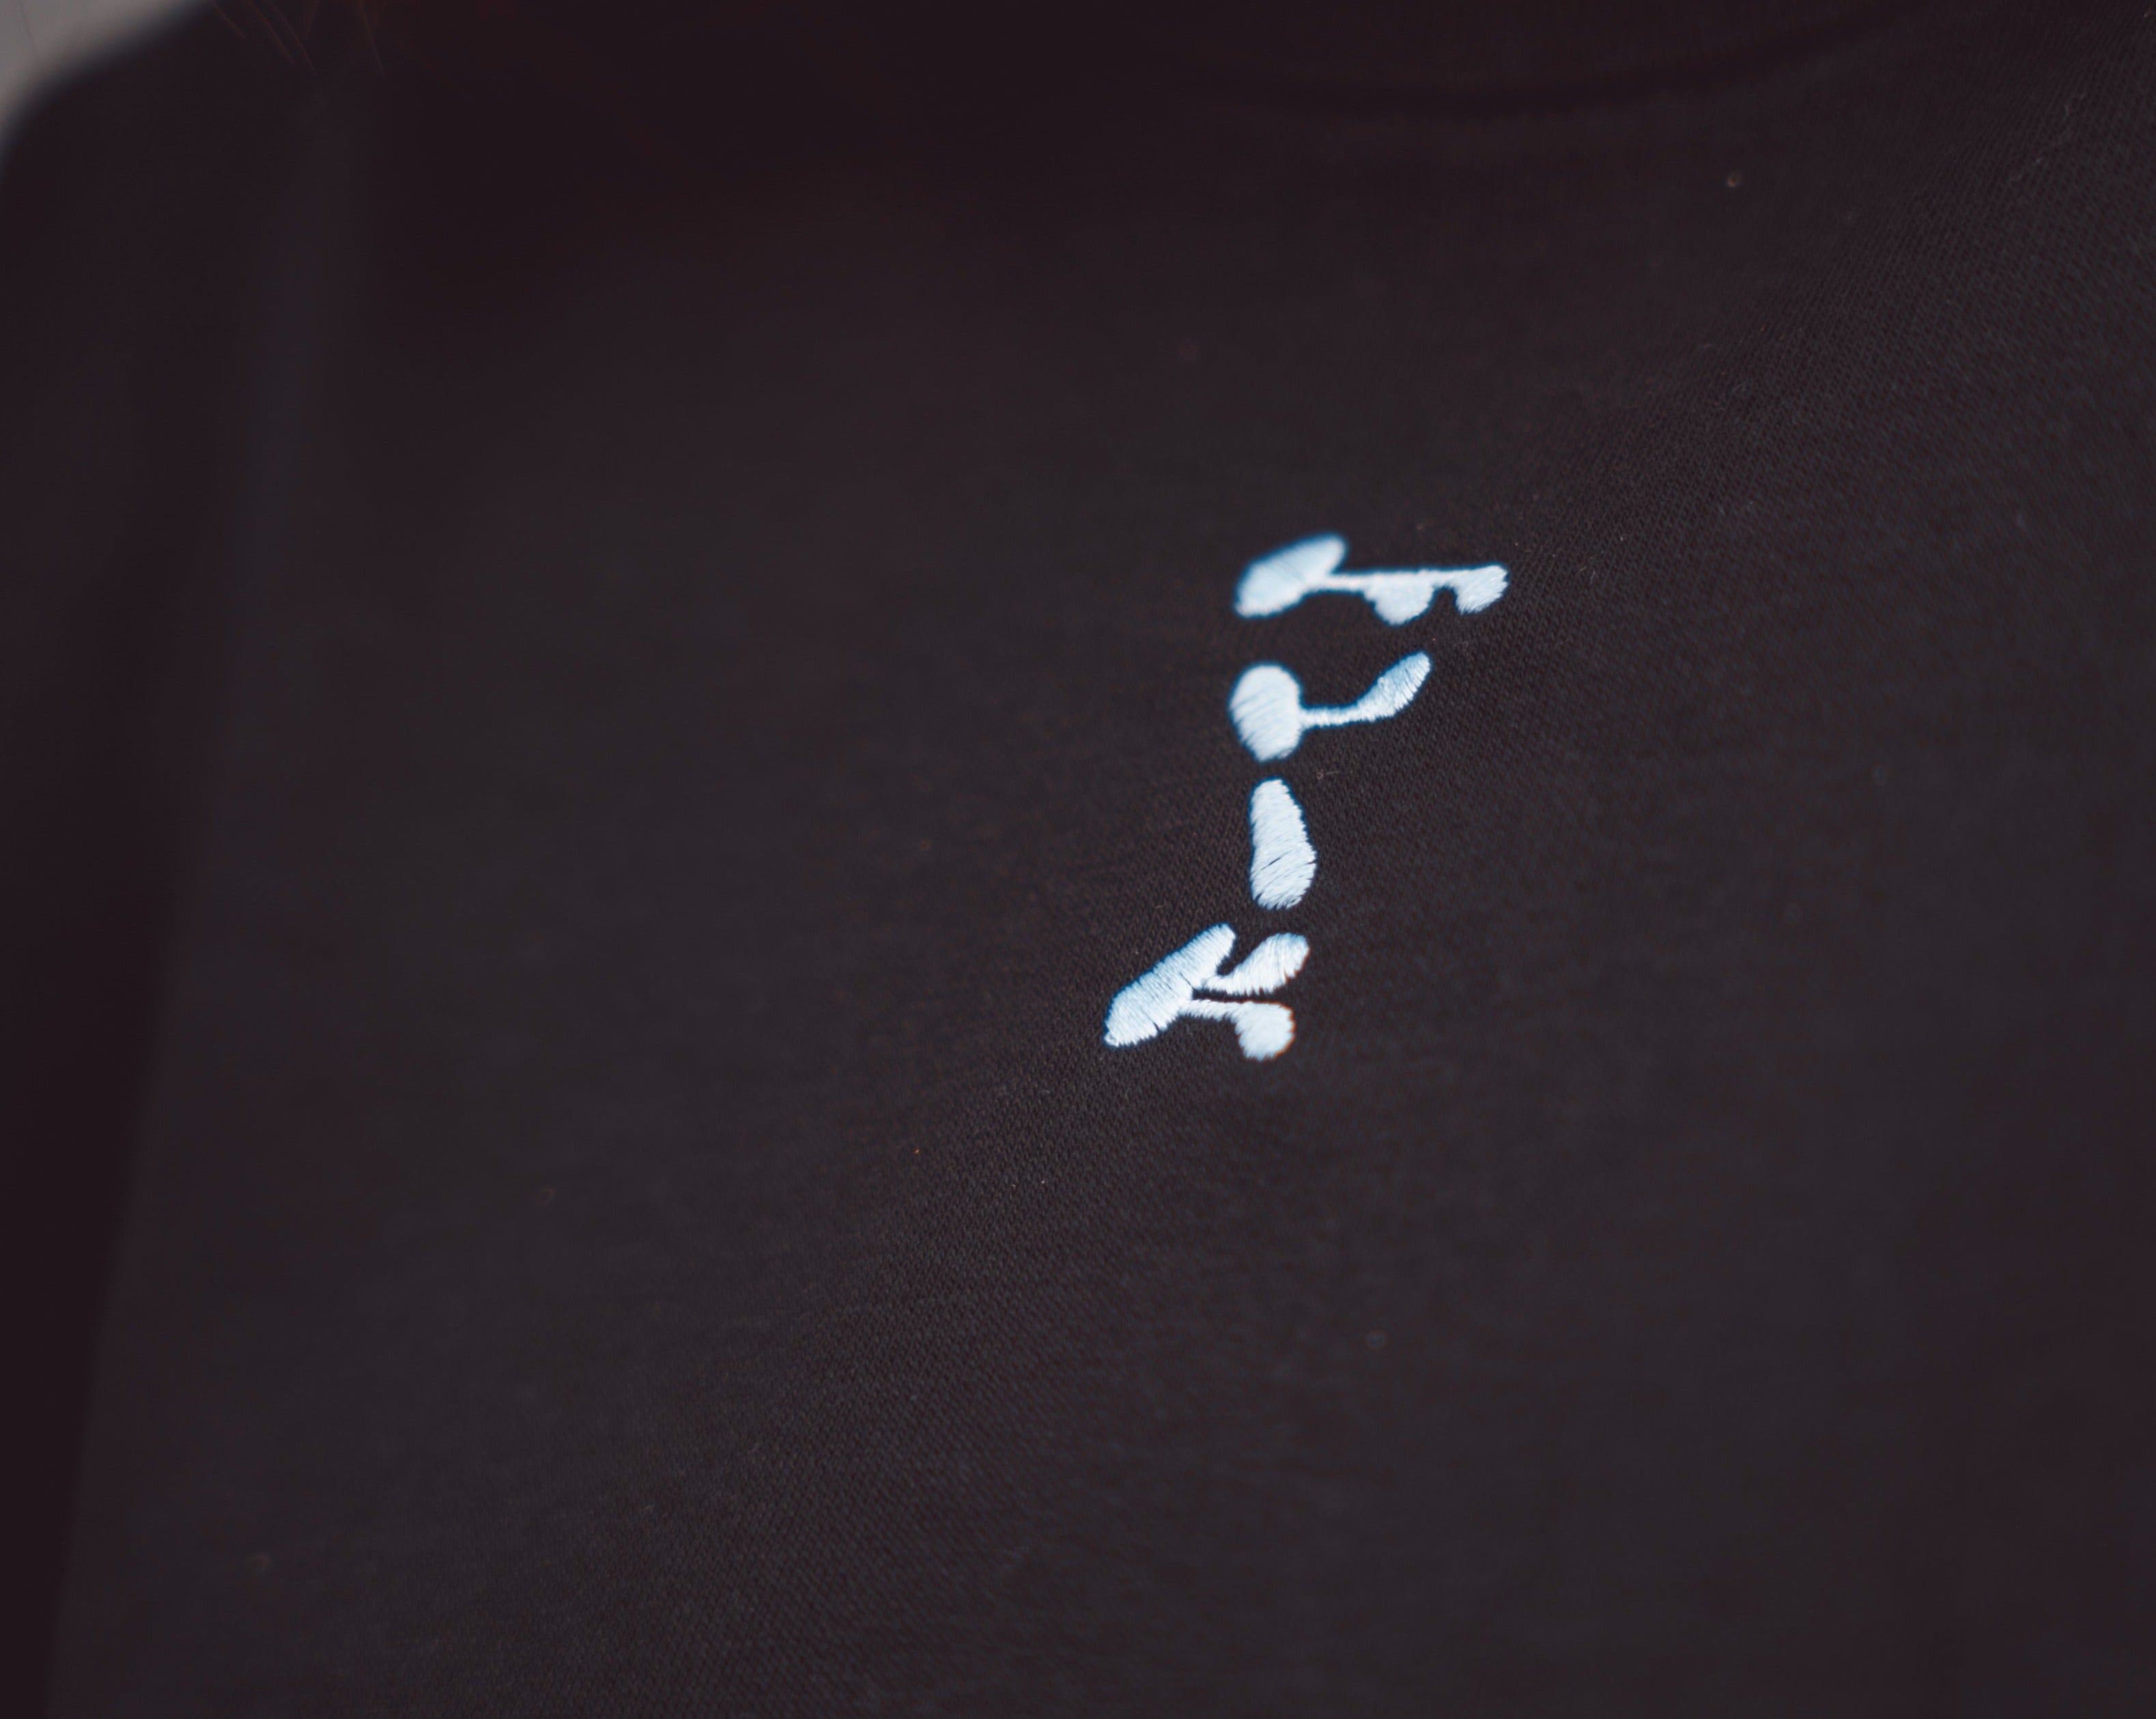 Raver | Black | Cropped Mädels Bio Sweatshirt